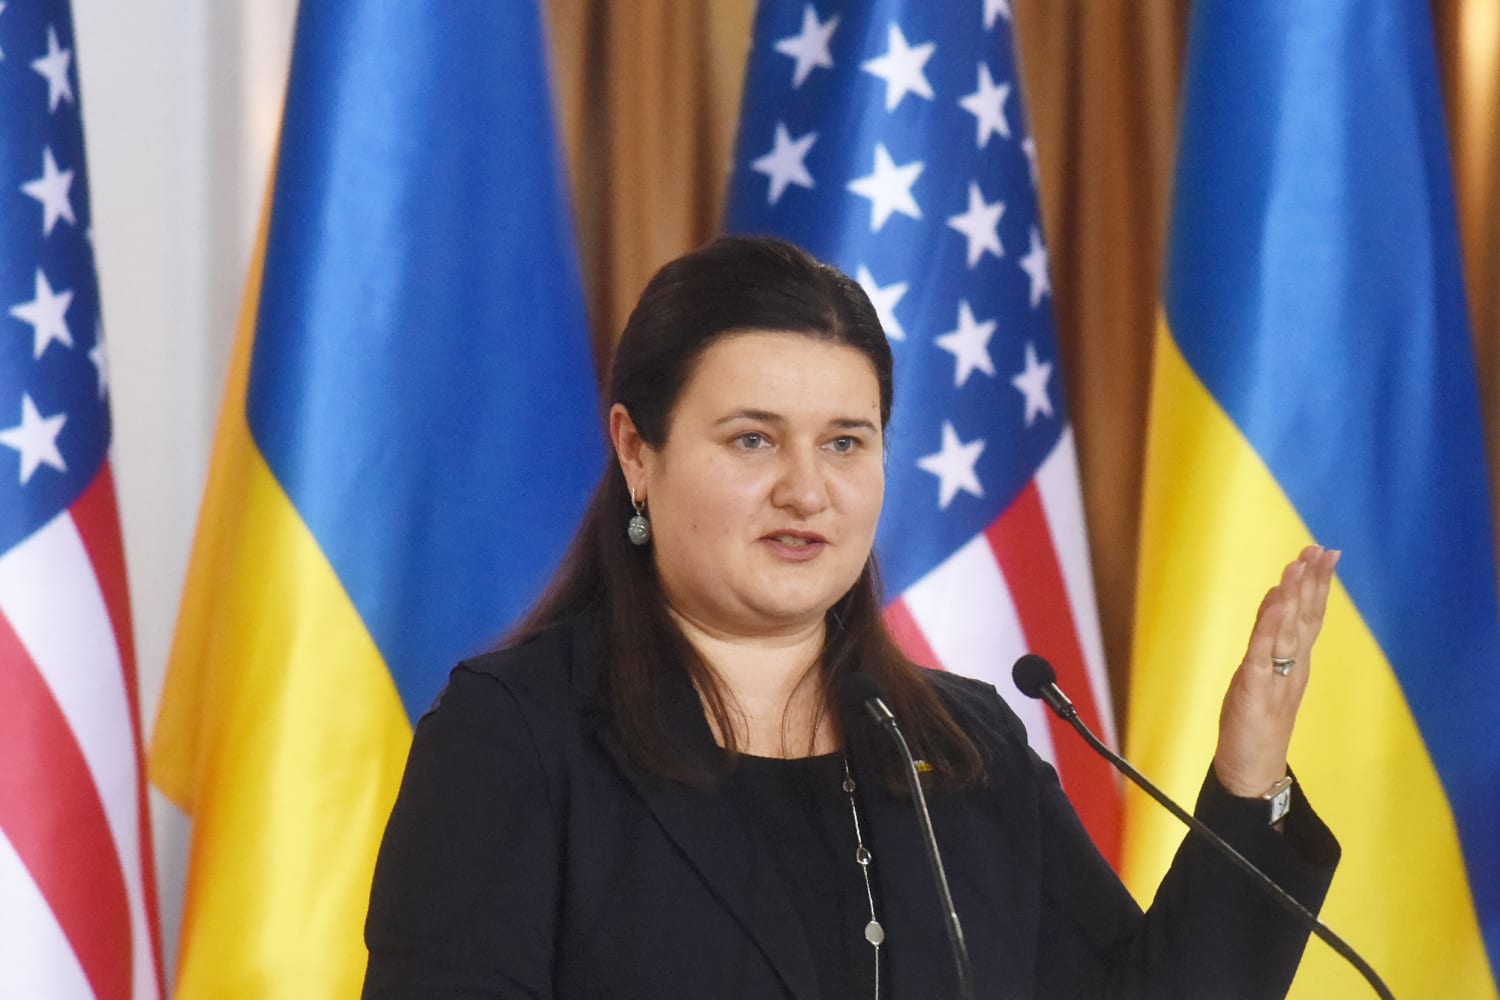 Ukraine ambassador drops by McCarthy's office as Republicans split on aid